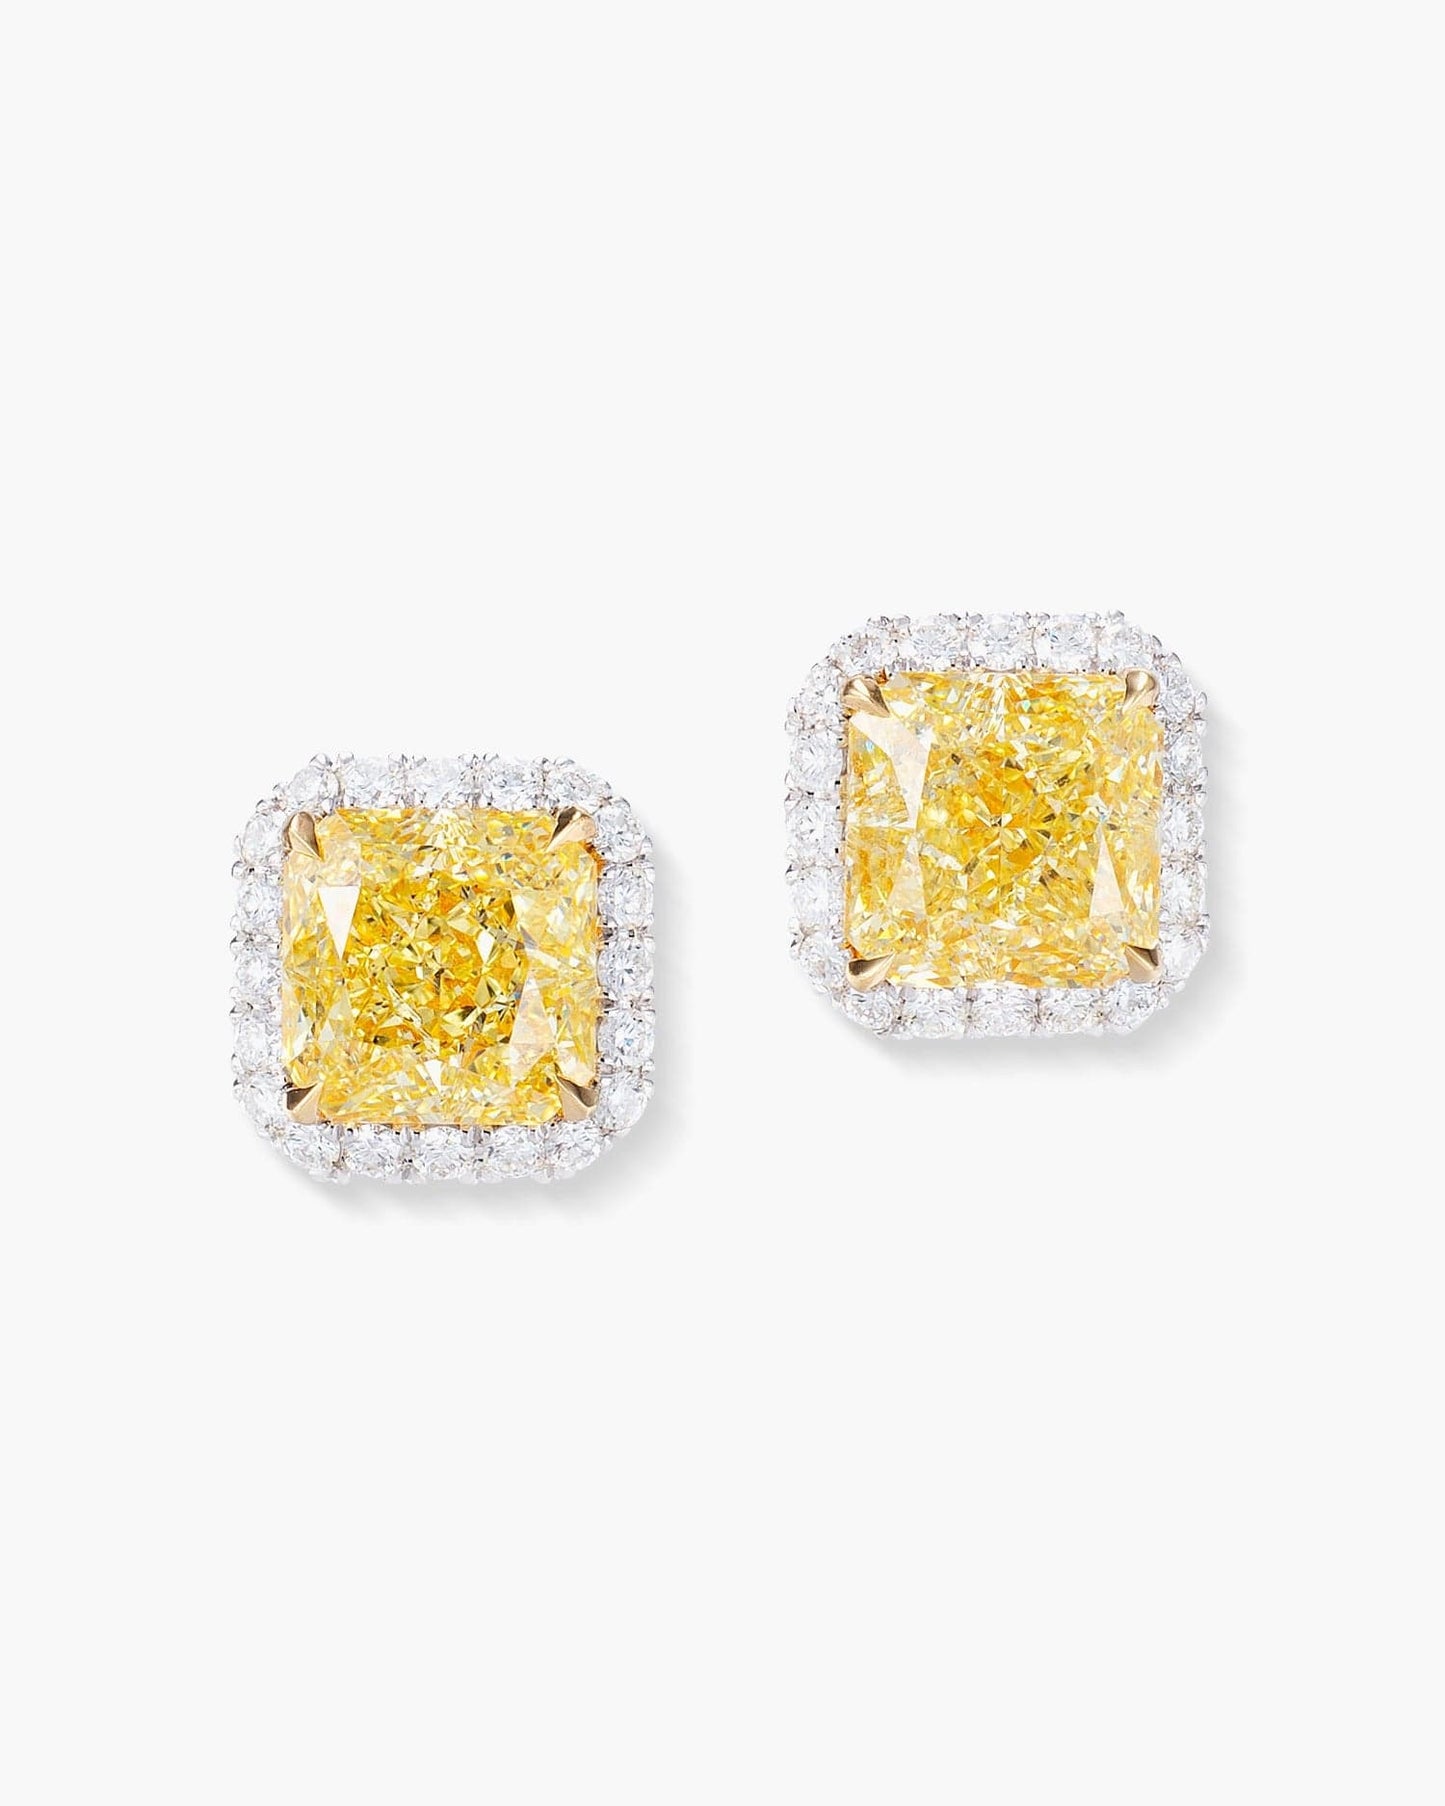 3.15 carat Radiant Cut Fancy Yellow and White Diamond Ear Studs